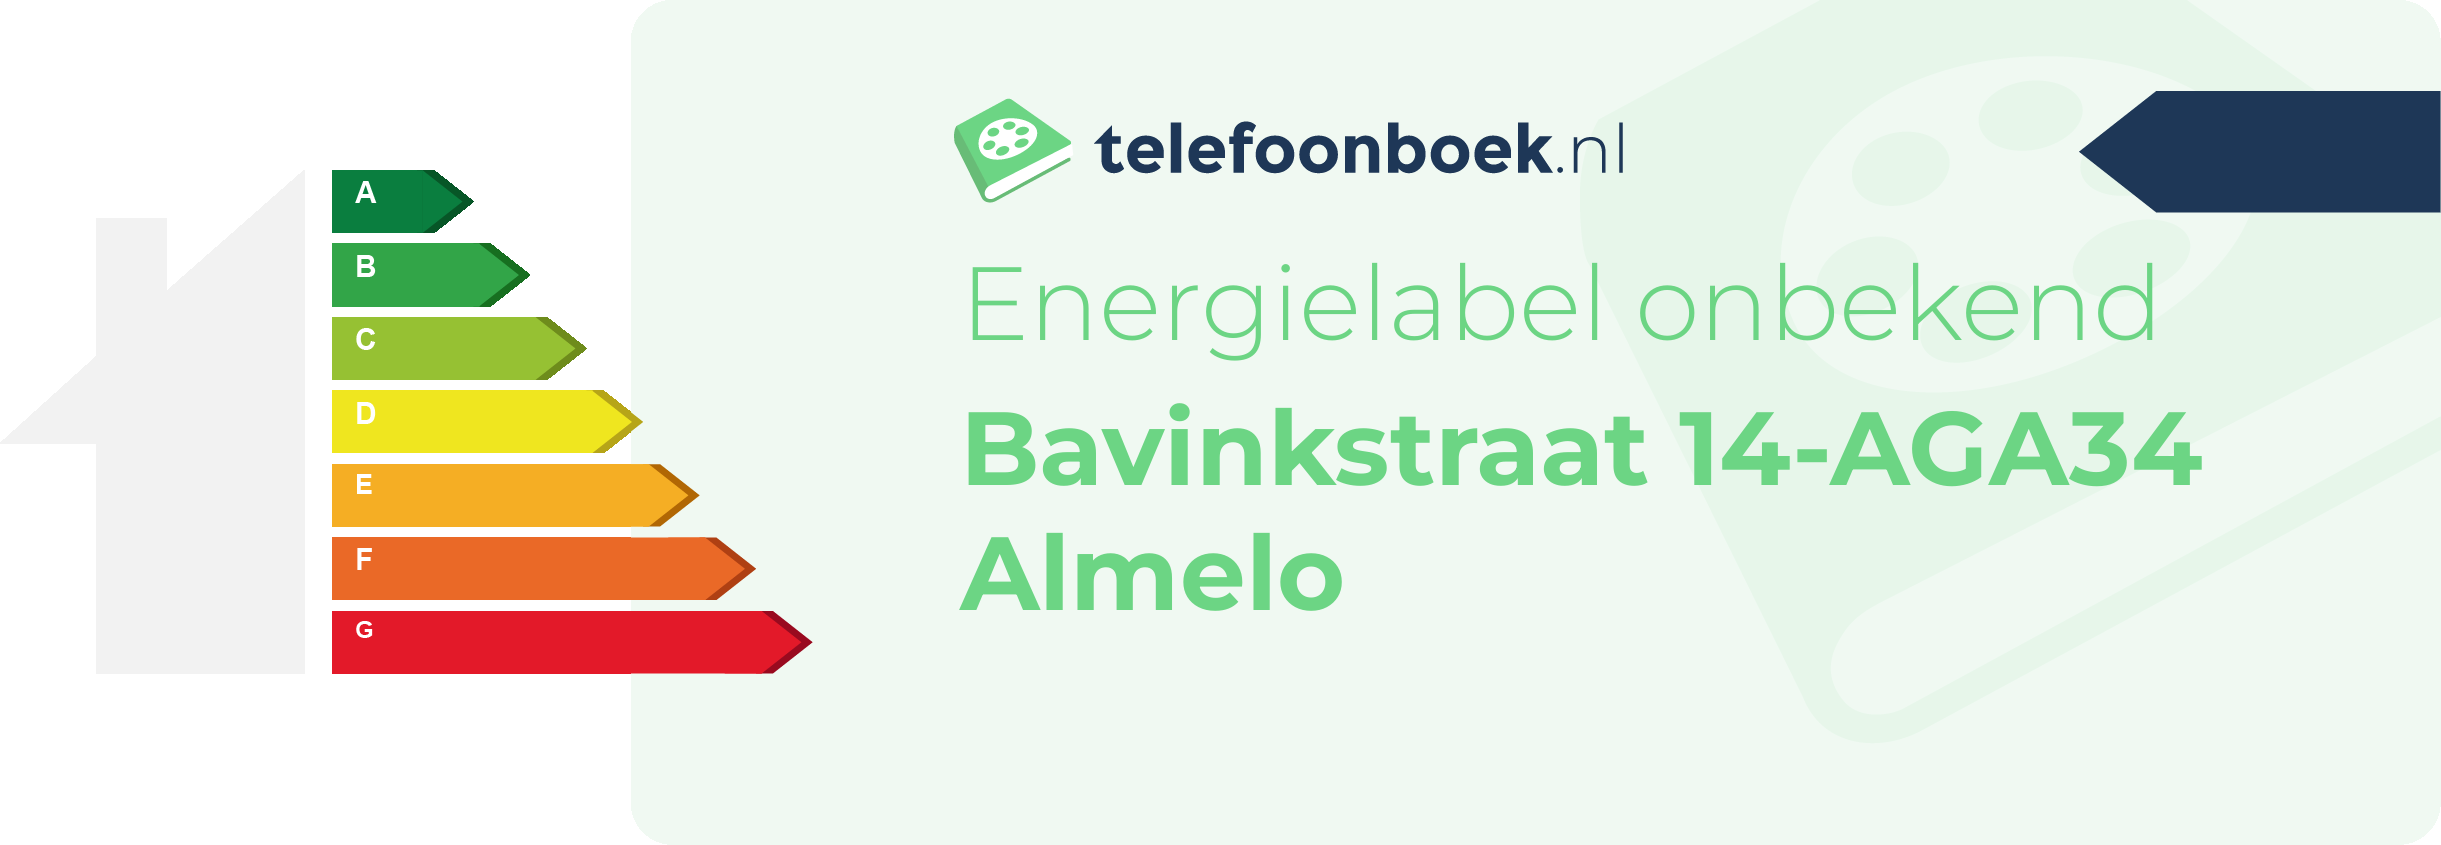 Energielabel Bavinkstraat 14-AGA34 Almelo